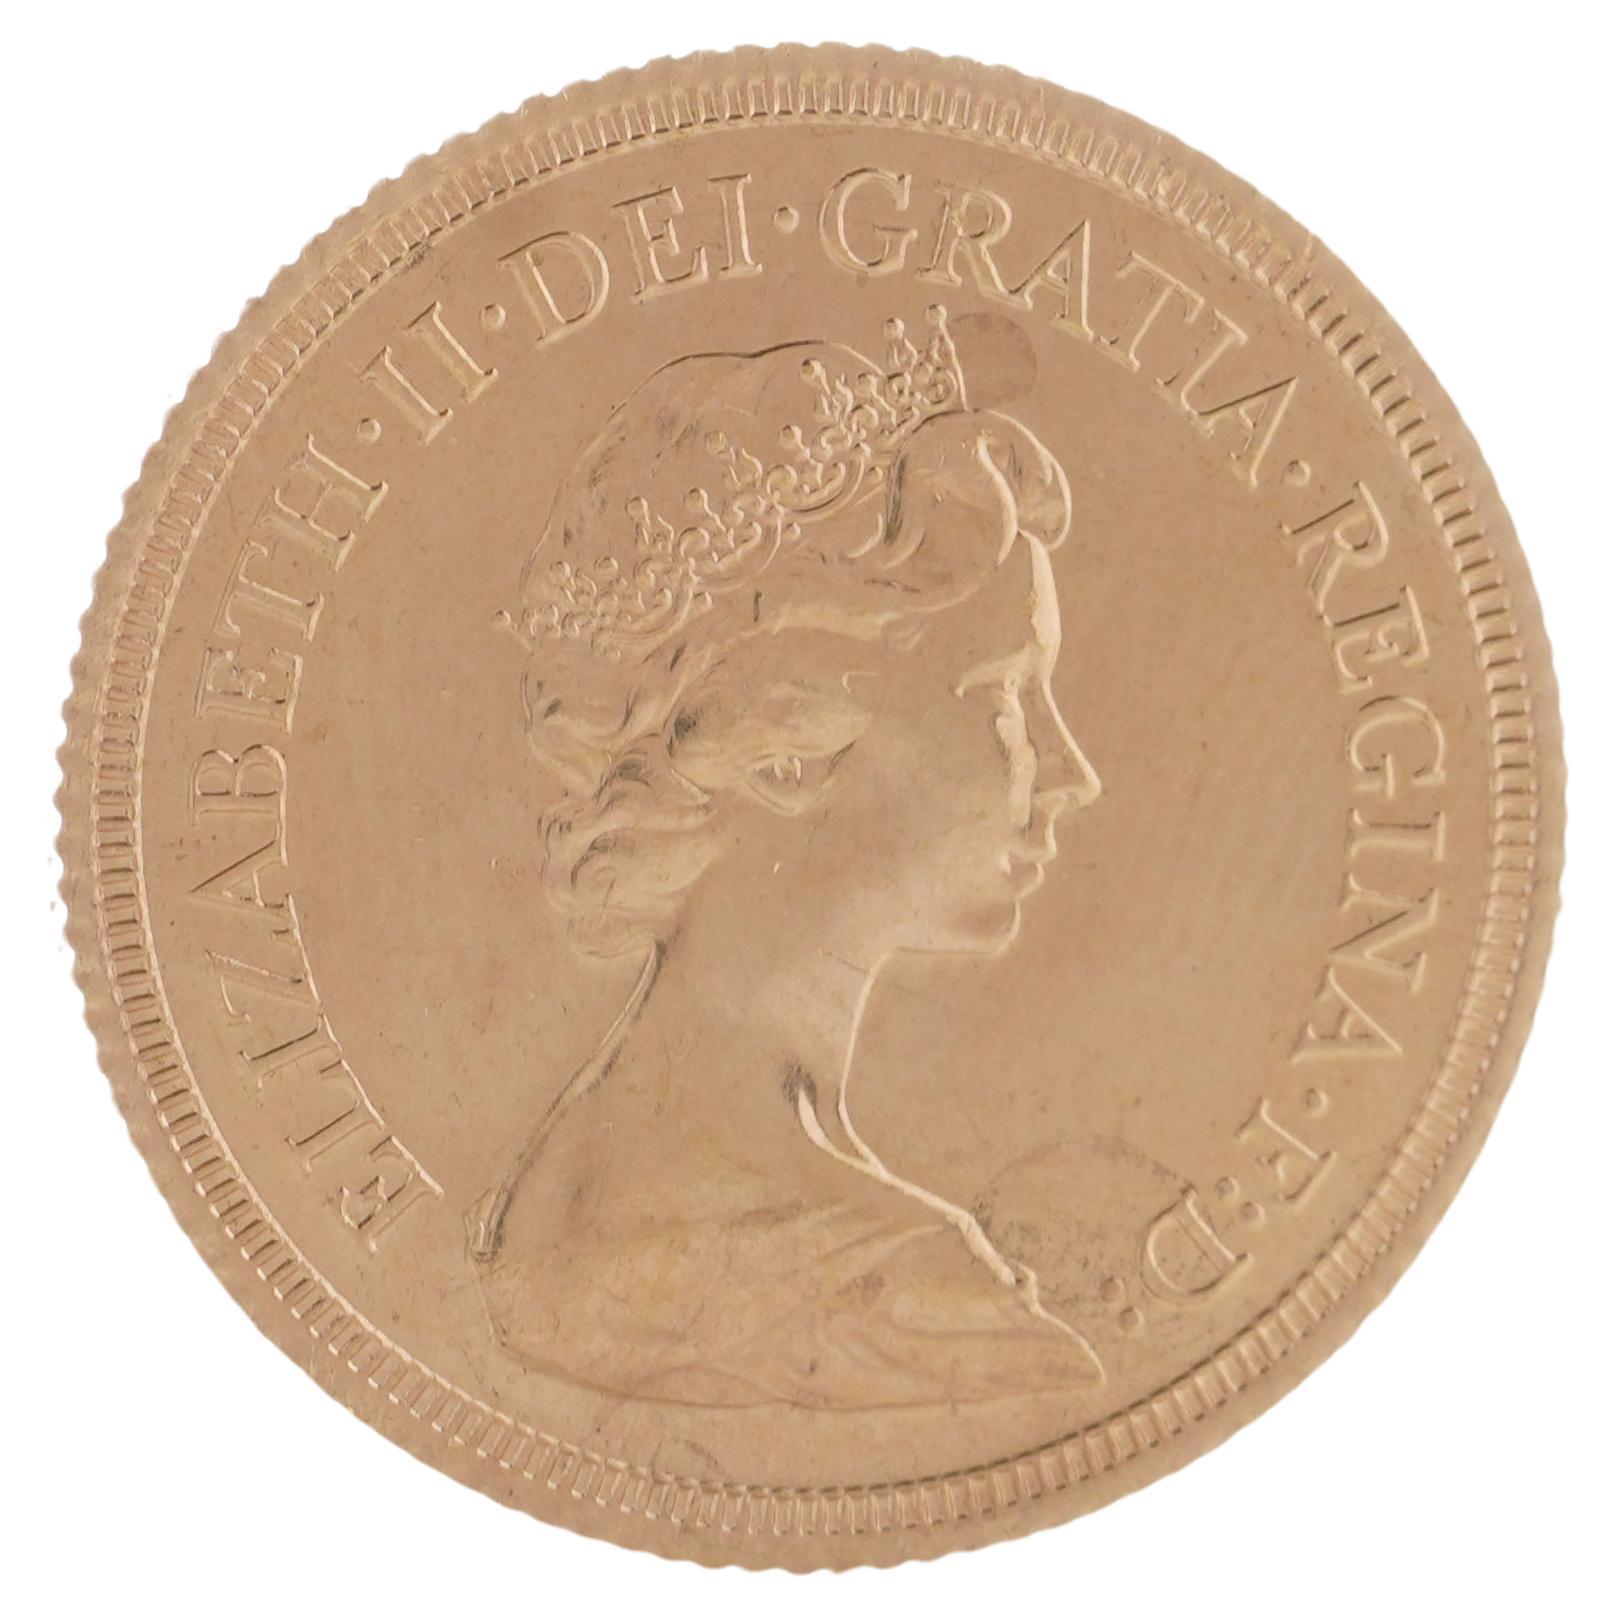 1979 Gold Sovereign - Elizabeth II. Entschlossenes Porträt